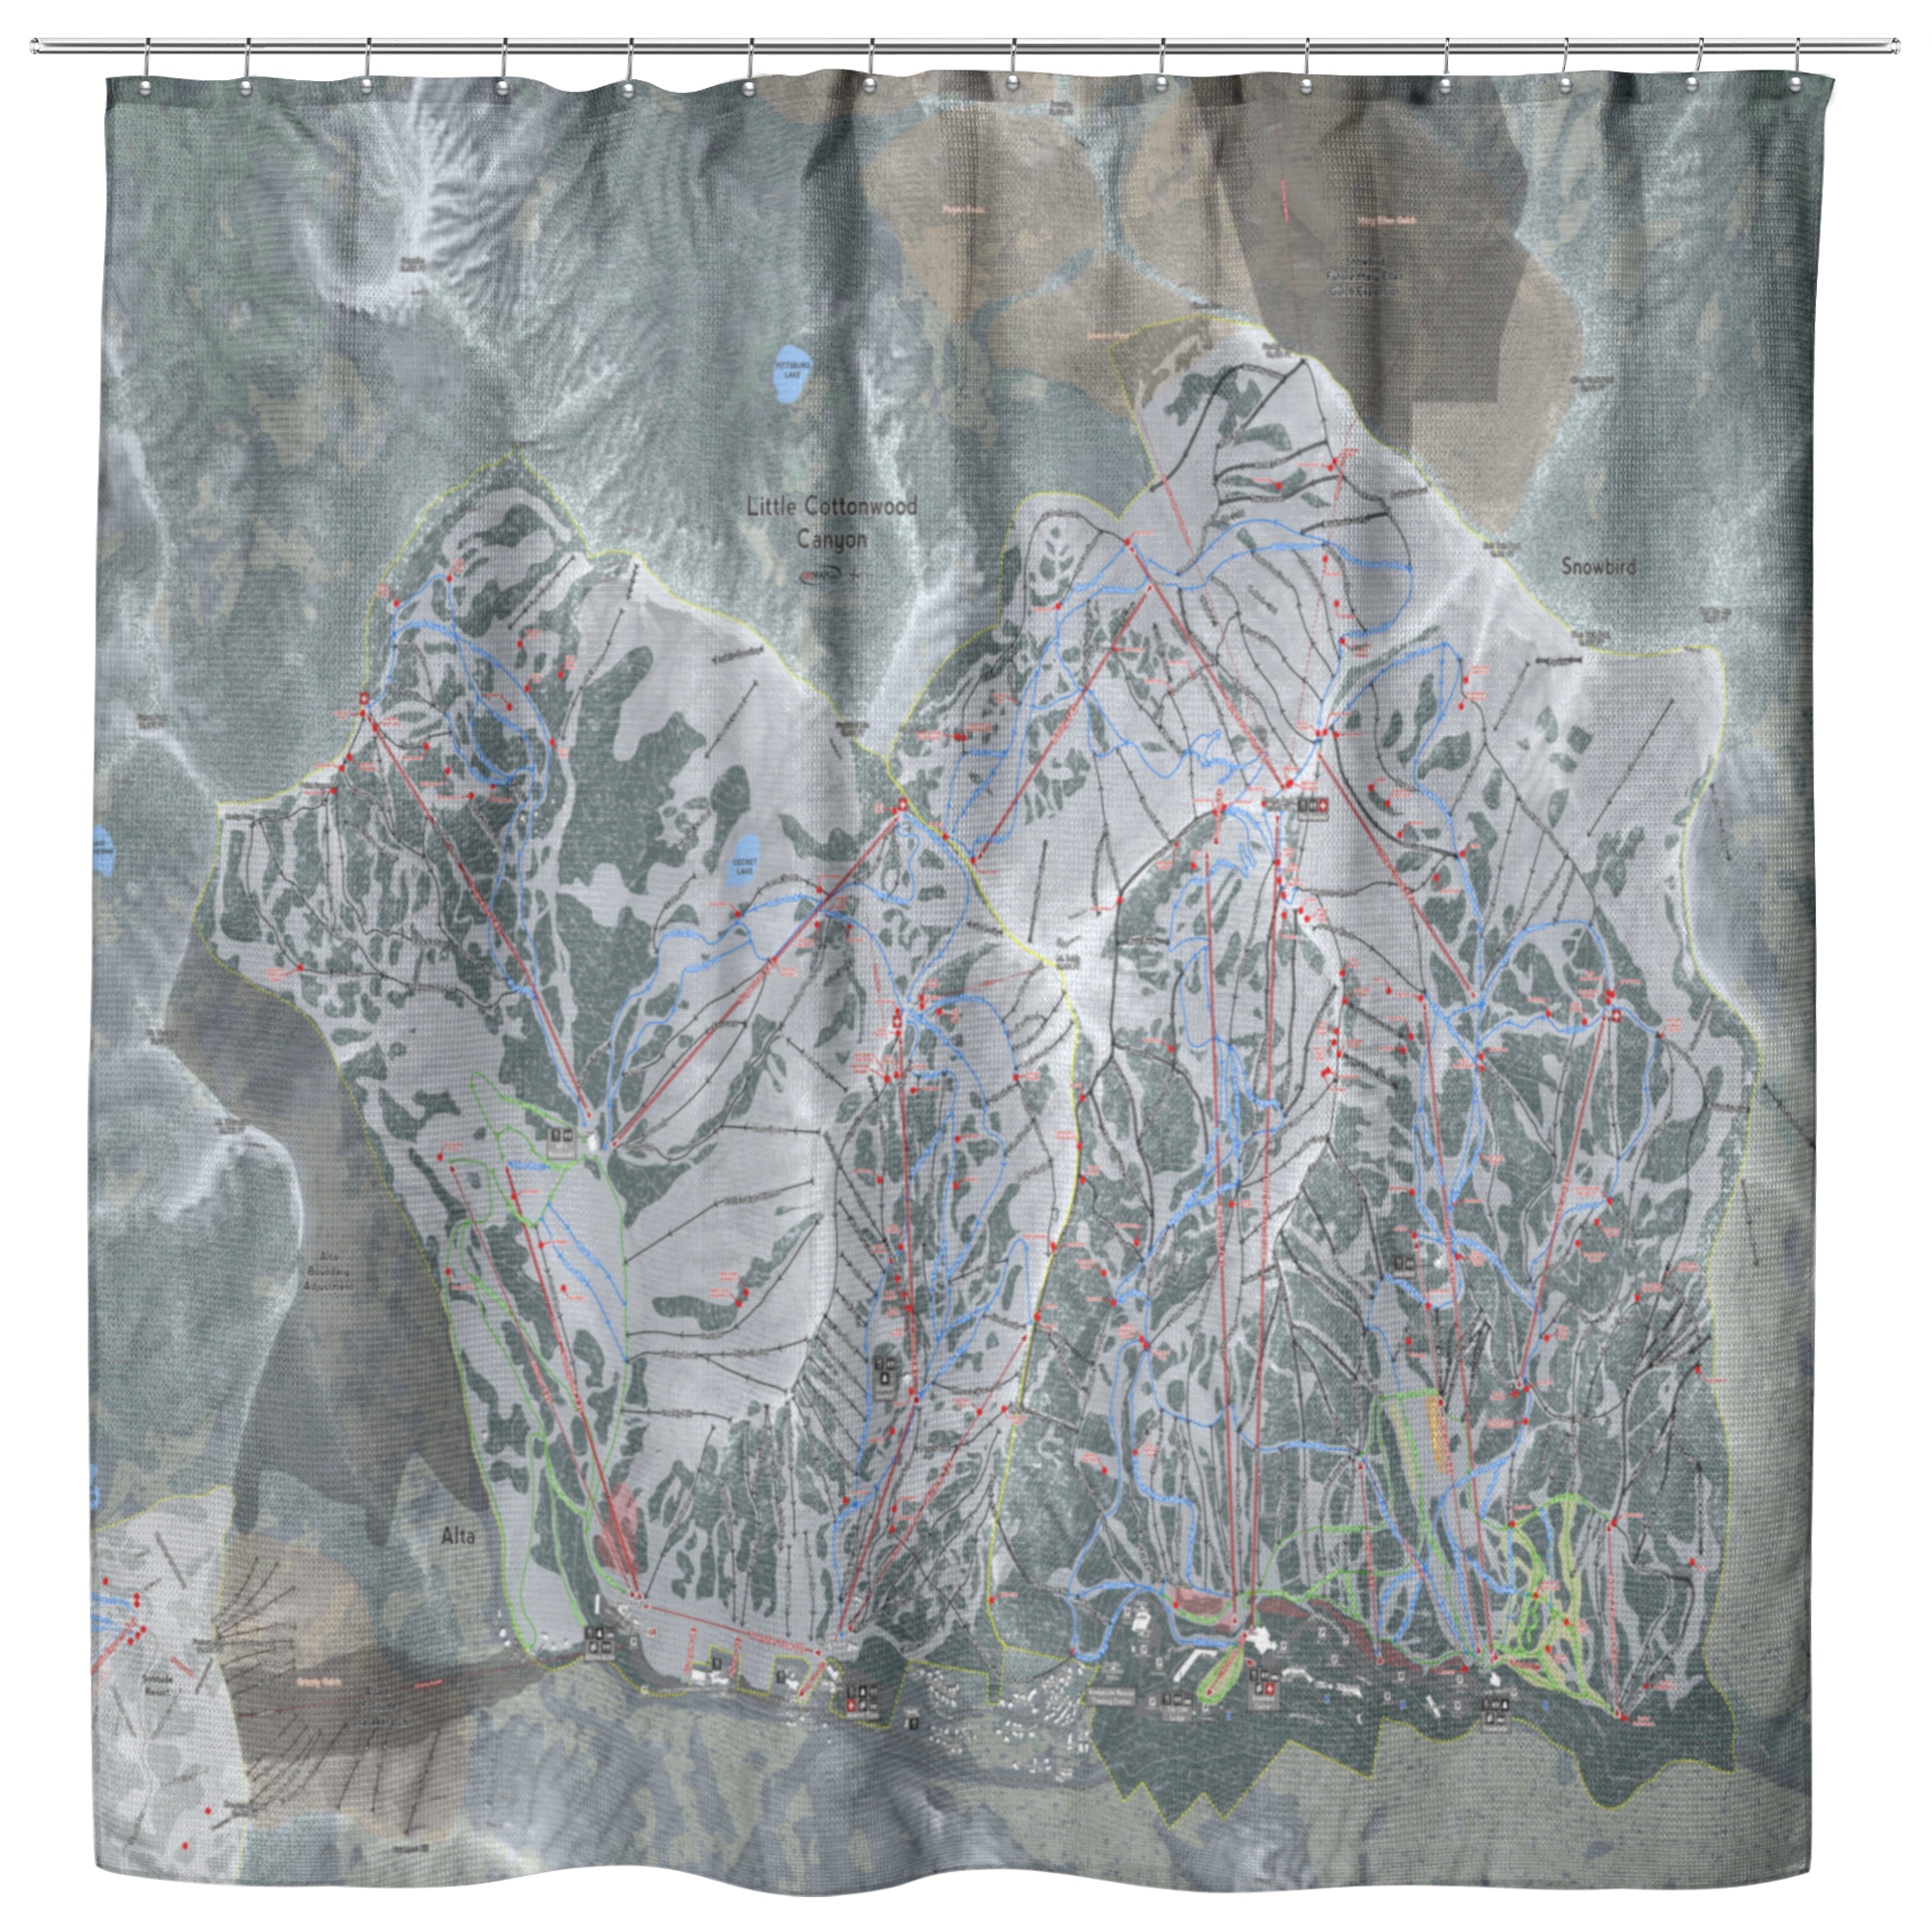 Little Cottonwood Canyon, Utah Ski Trail Map Shower Curtain - Powderaddicts